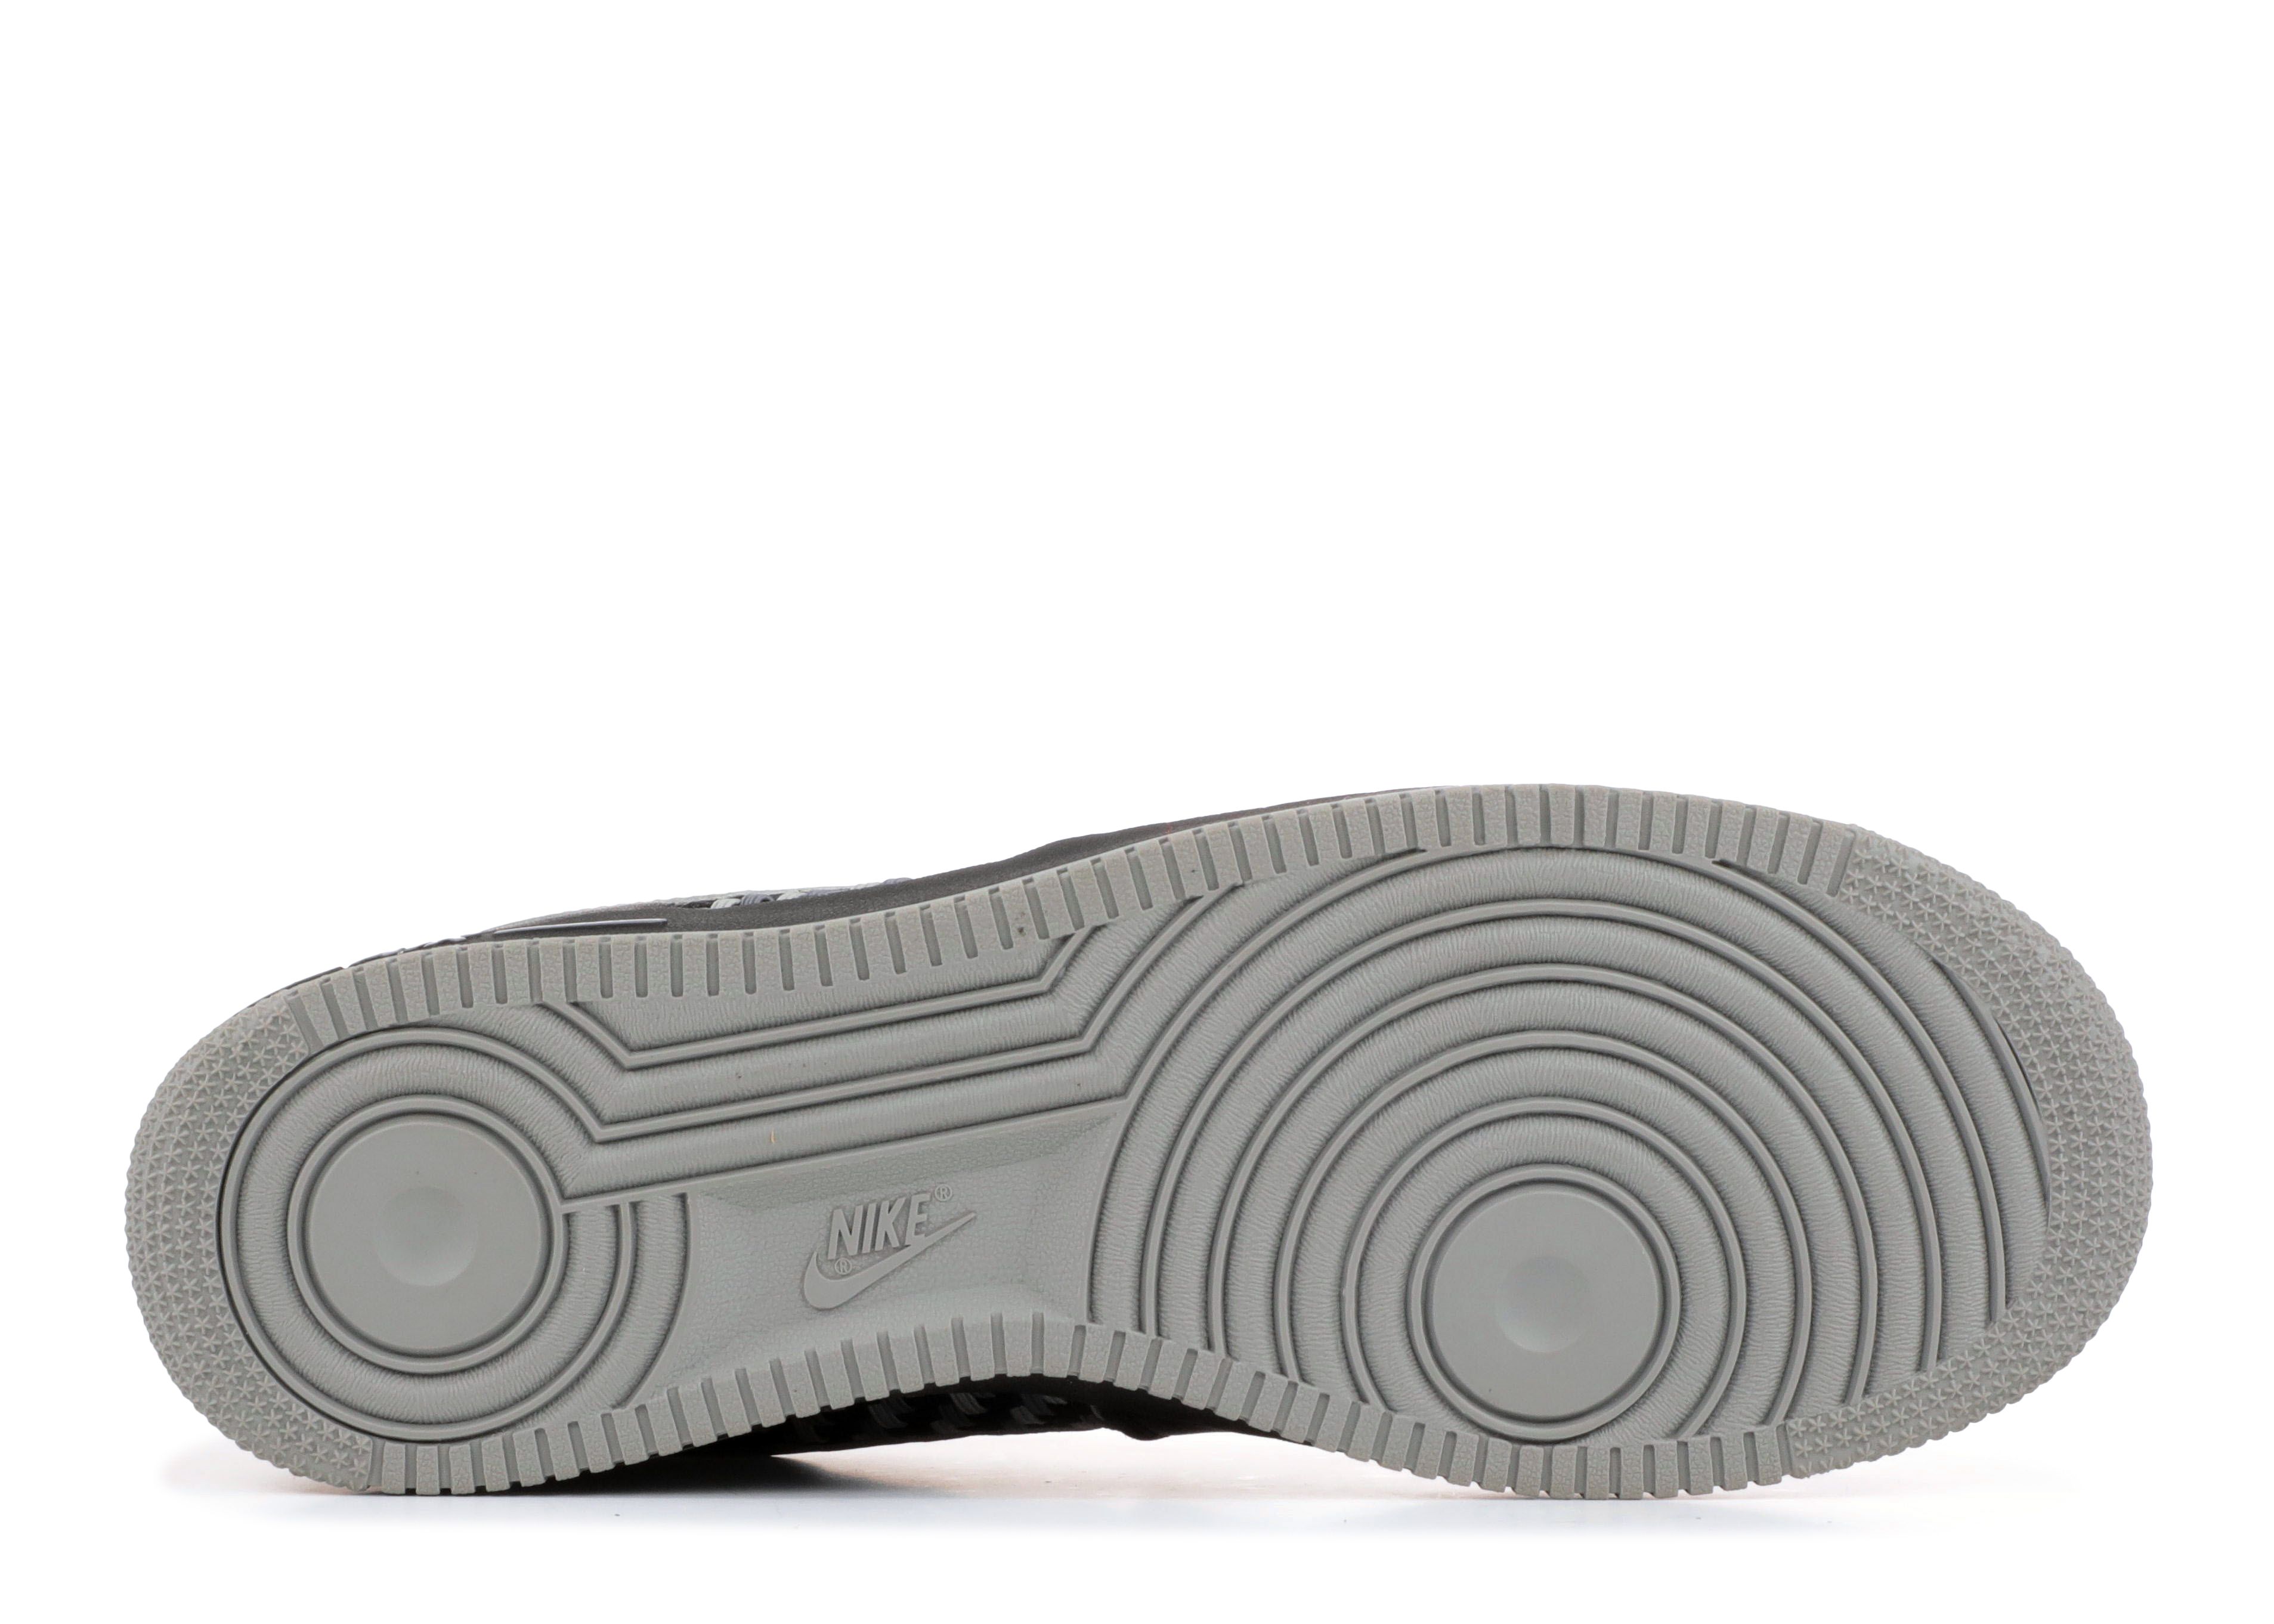 Air Force 1 Premium 'Woven Grey' - Nike - 309096 001 - black